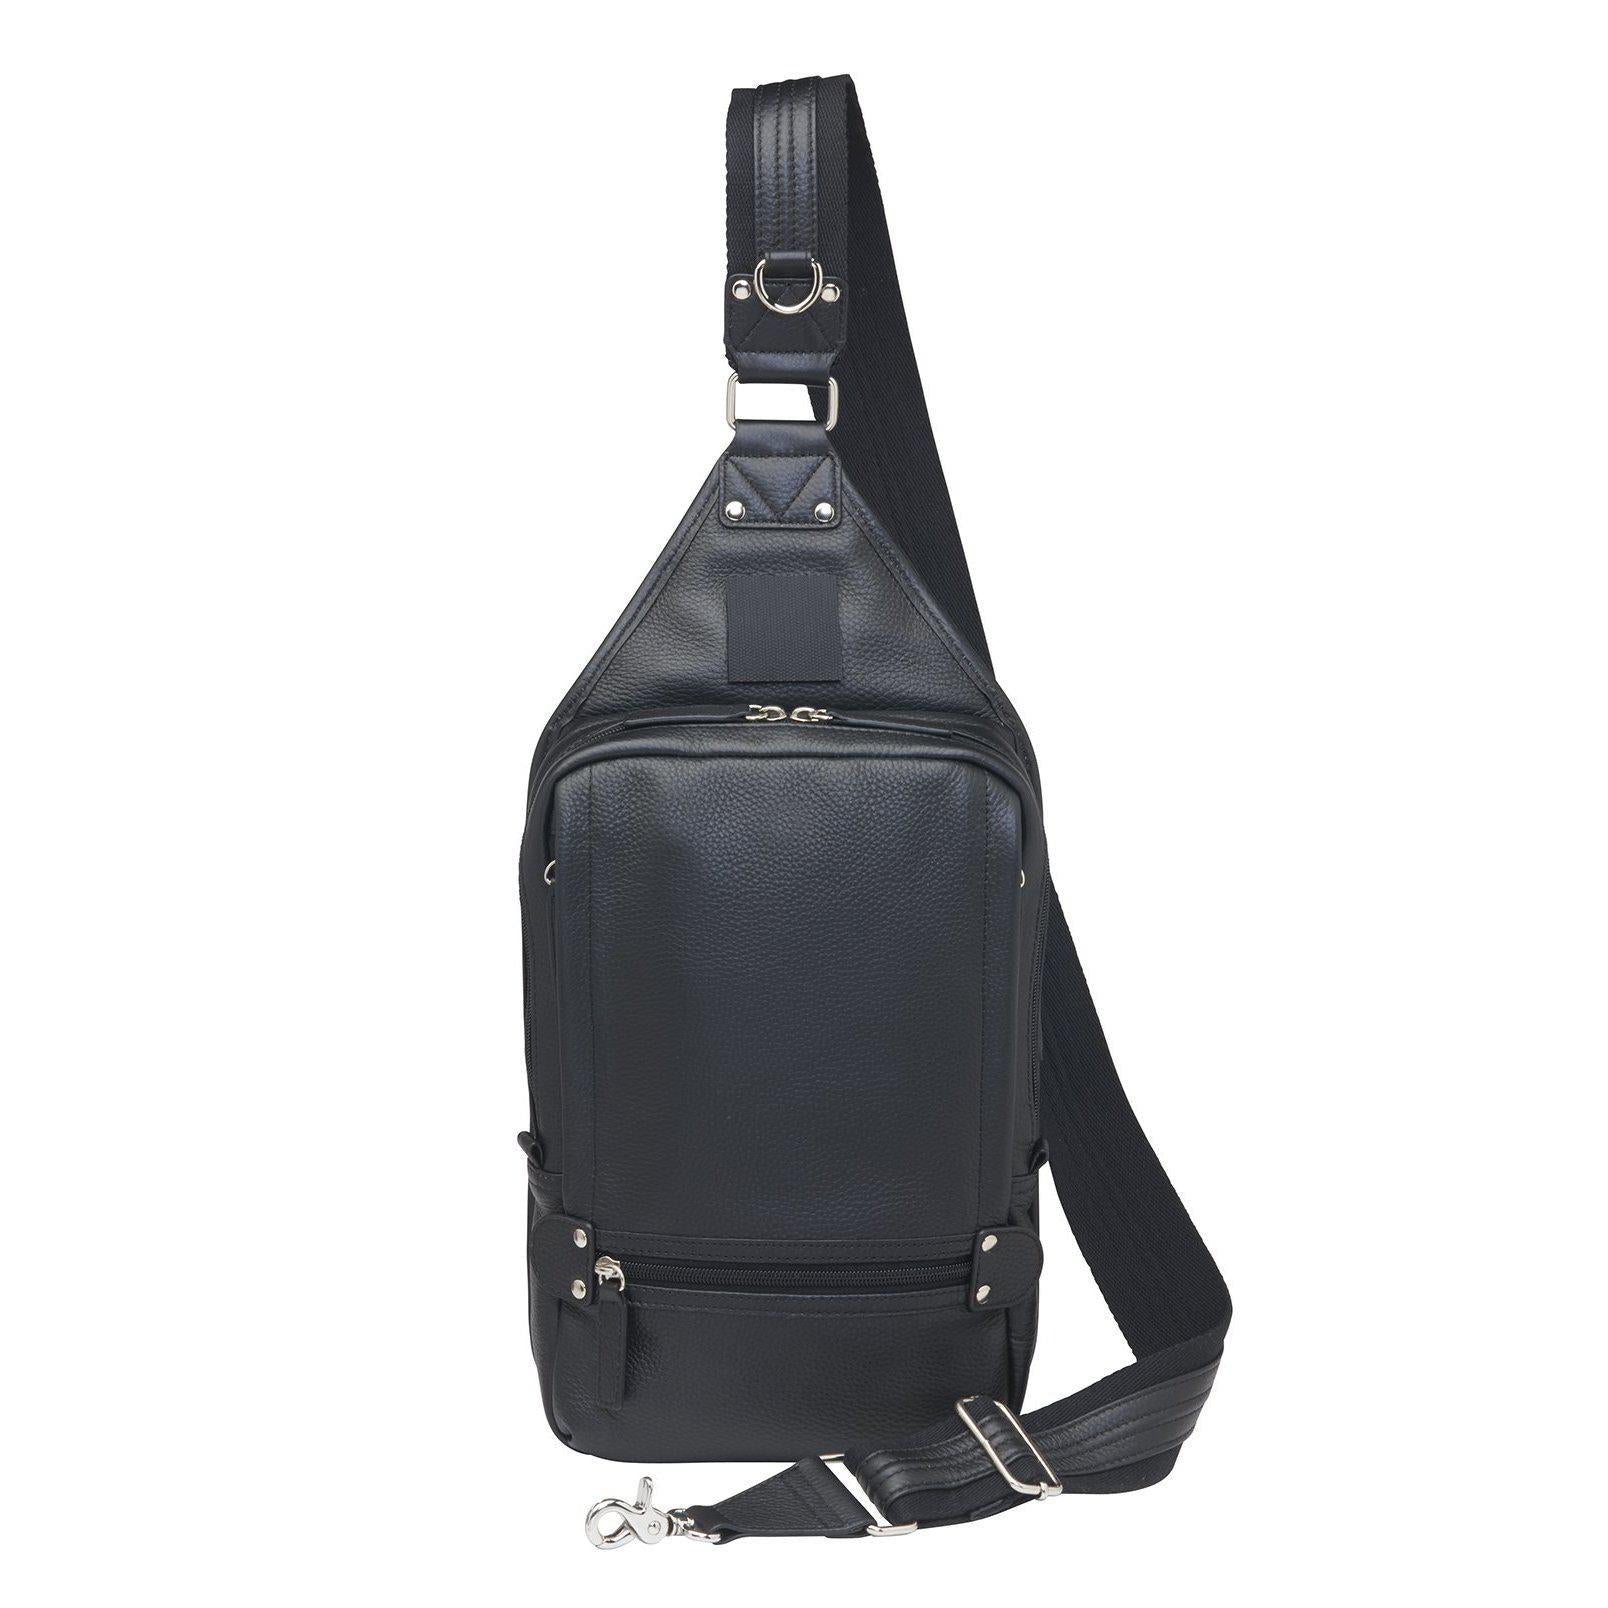 Sling Backpack for Concealed Carry